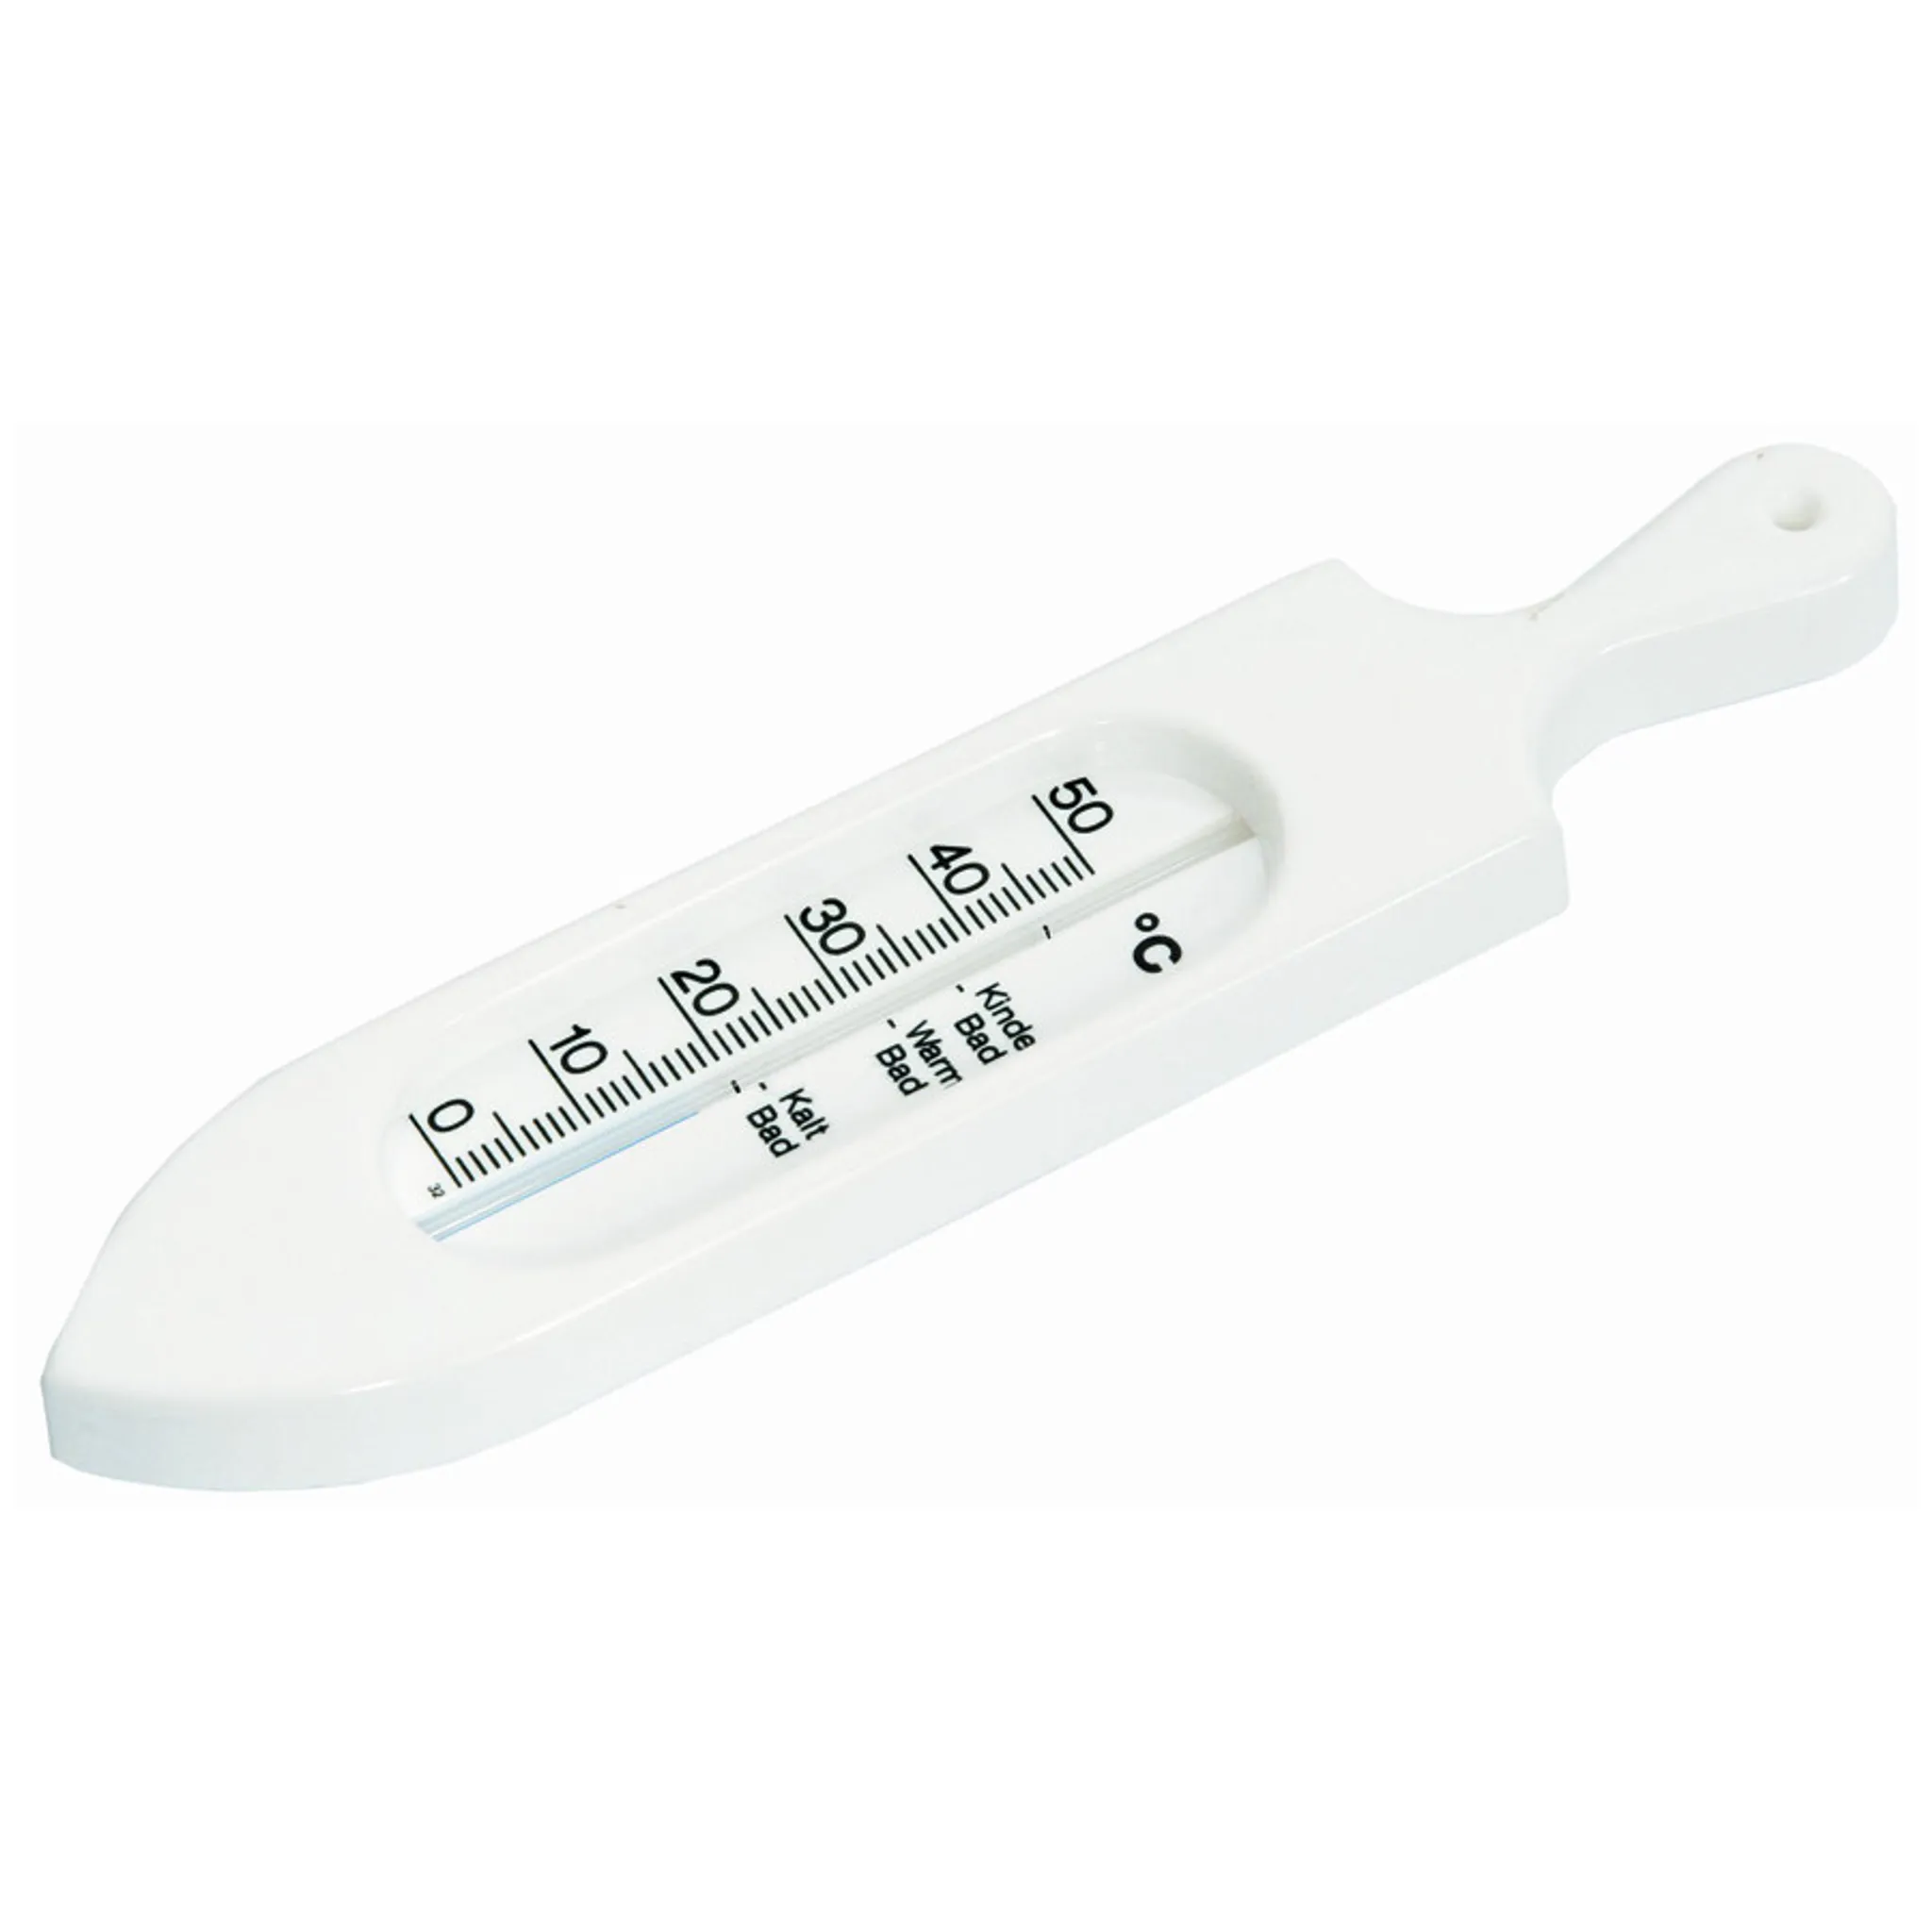 Küchenartikel & Haushaltsartikel Haushaltsgeräte Thermometer Badethermometer TFA 14.3018.06 Badethermometer Eco-blue blau, 